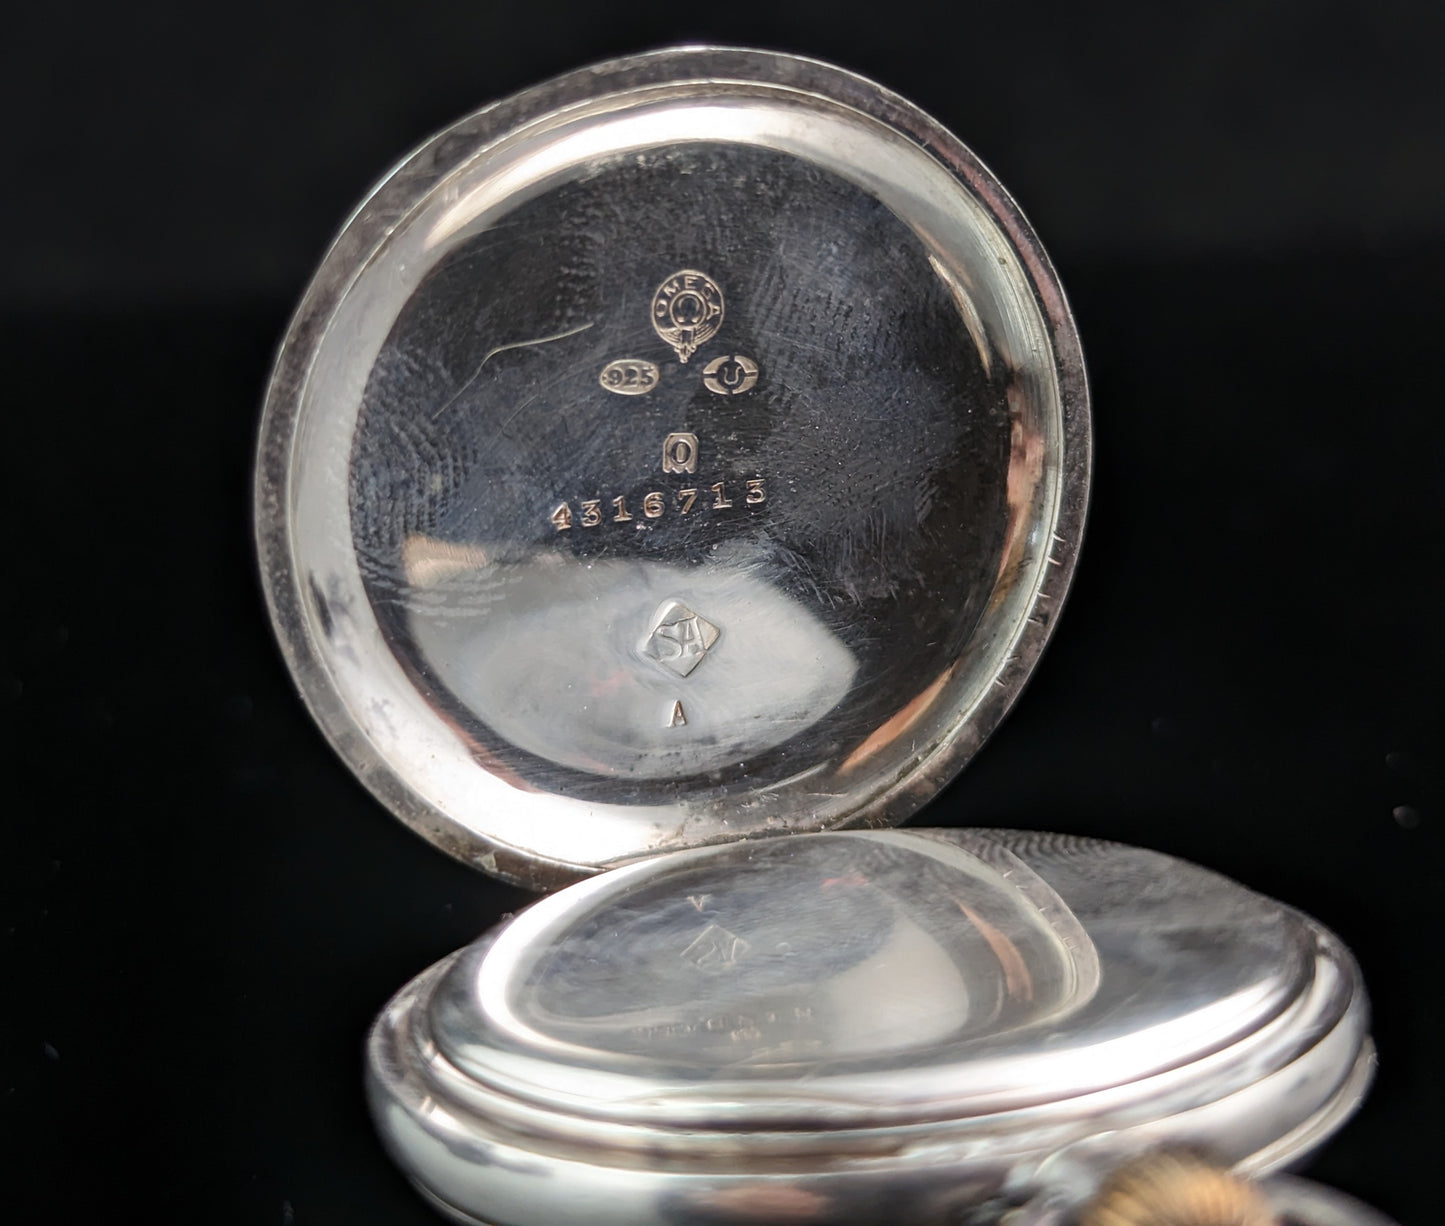 Antique Sterling silver half hunter pocket watch, fob watch